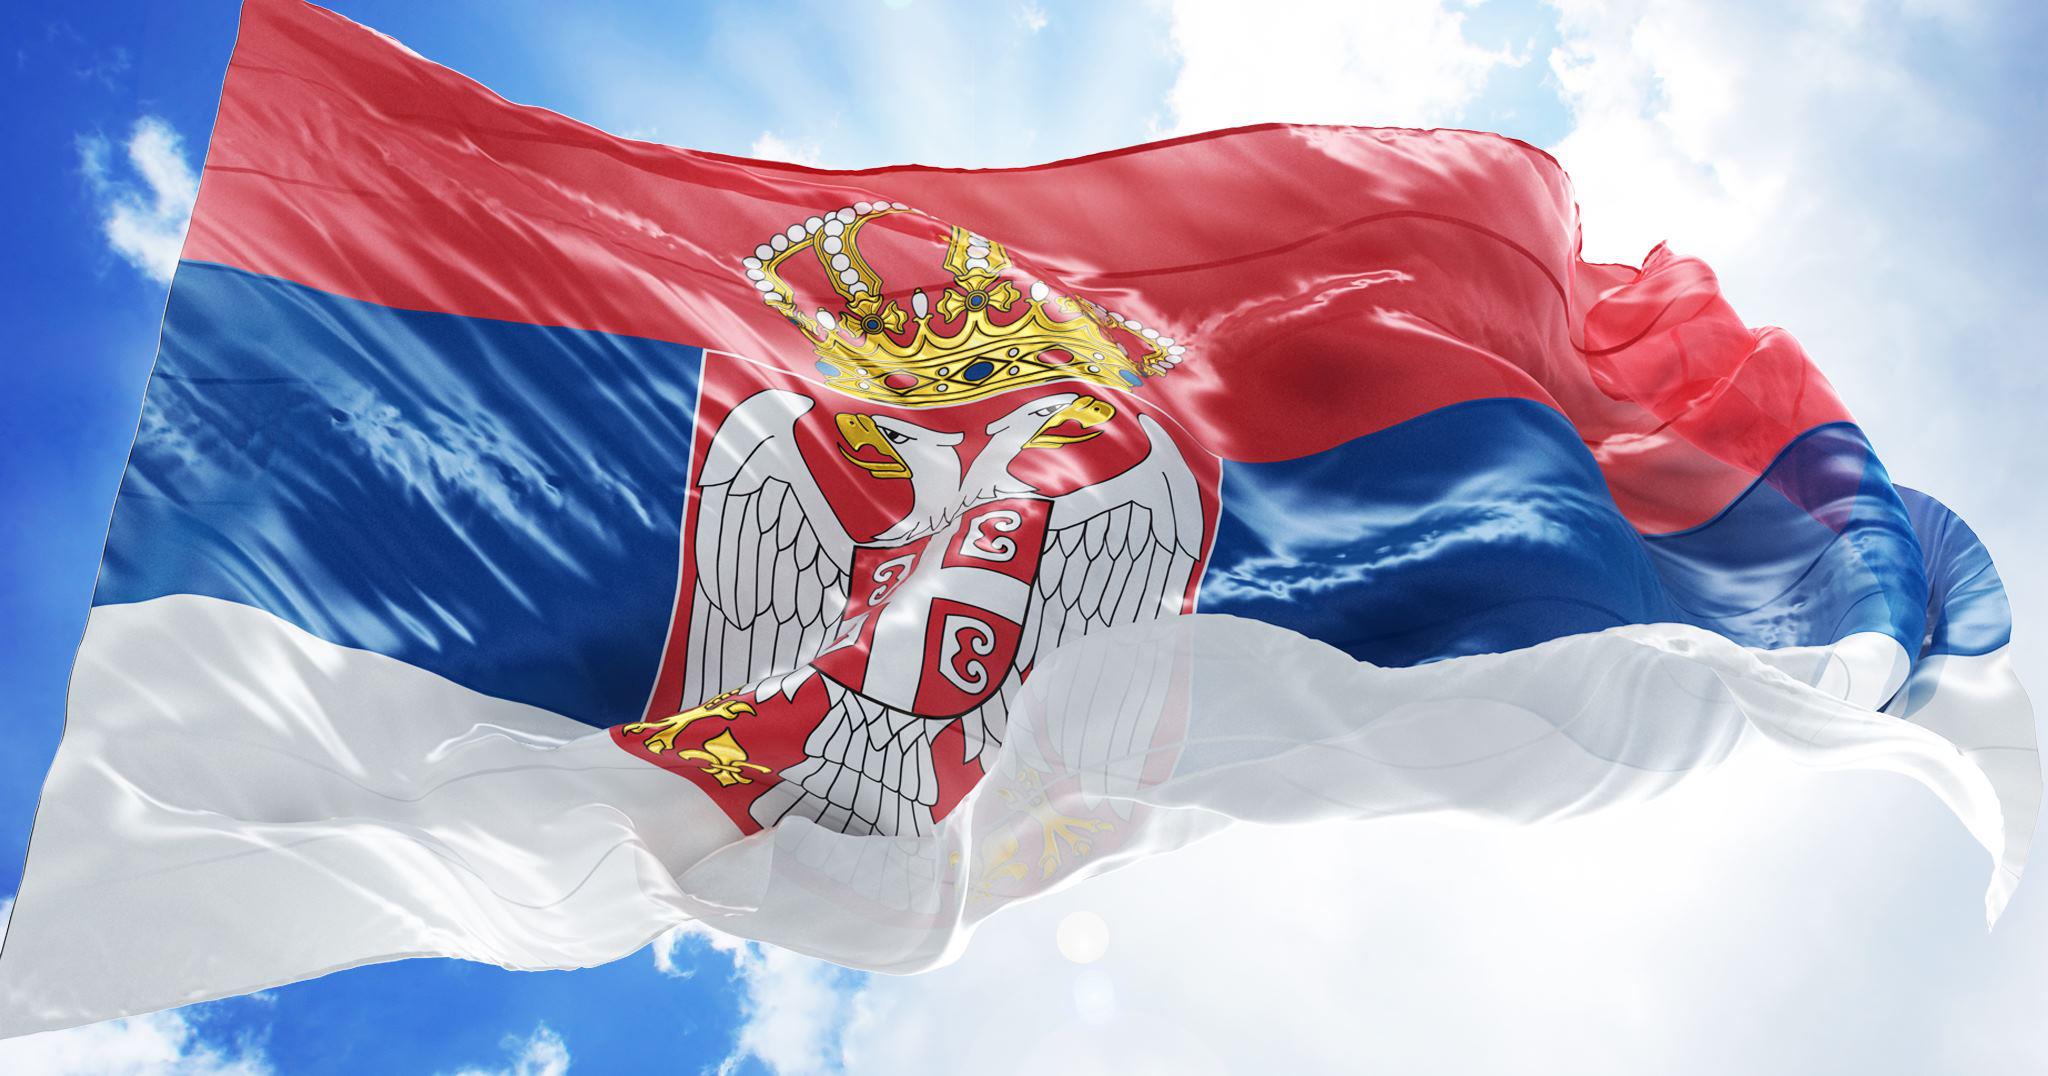 zastava-srbije-srpska-zastava-serbian-flag-serbia-grb-trobojka-srbija